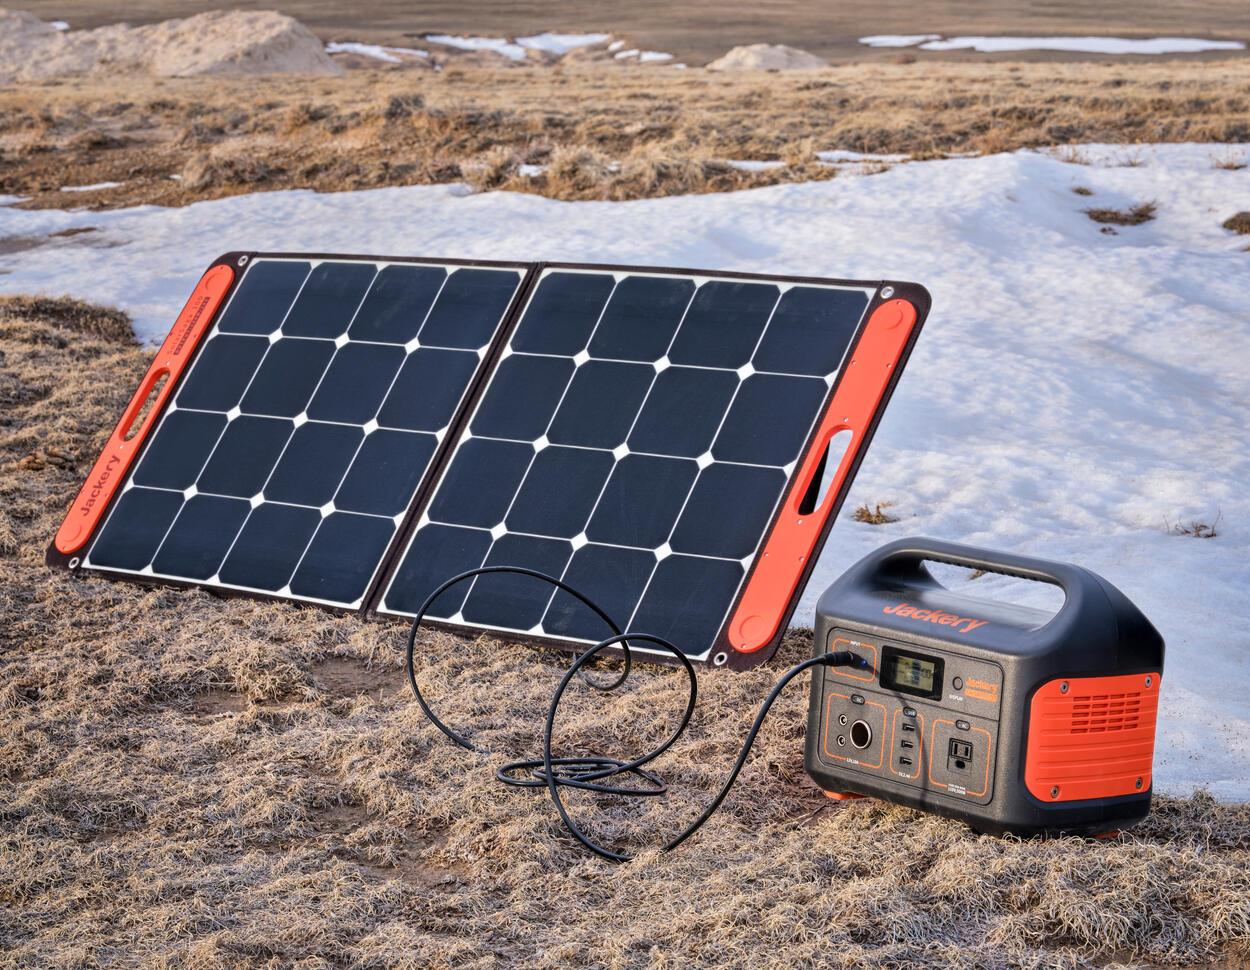 Stromausfall mit Solargenerator überbrücken statt Notstromaggregat